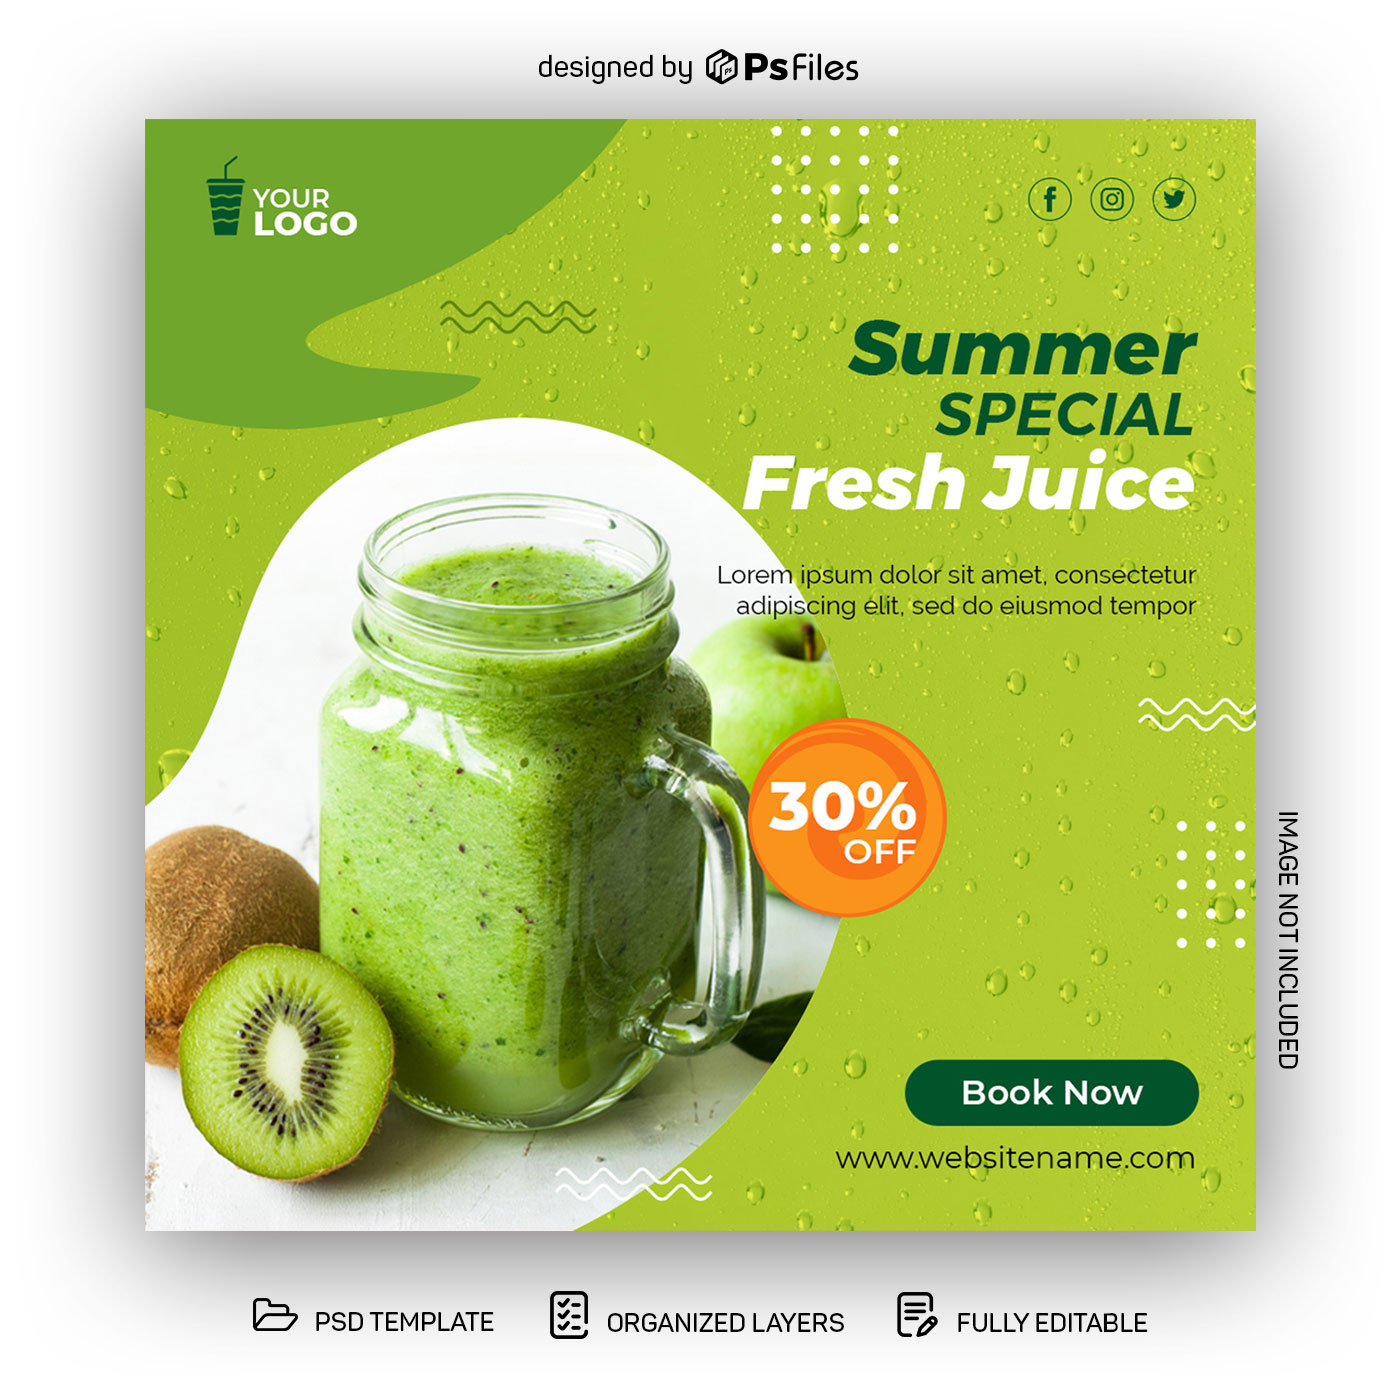 Creative Green Color theme Fresh Juice Social Media Post Design PSD Template